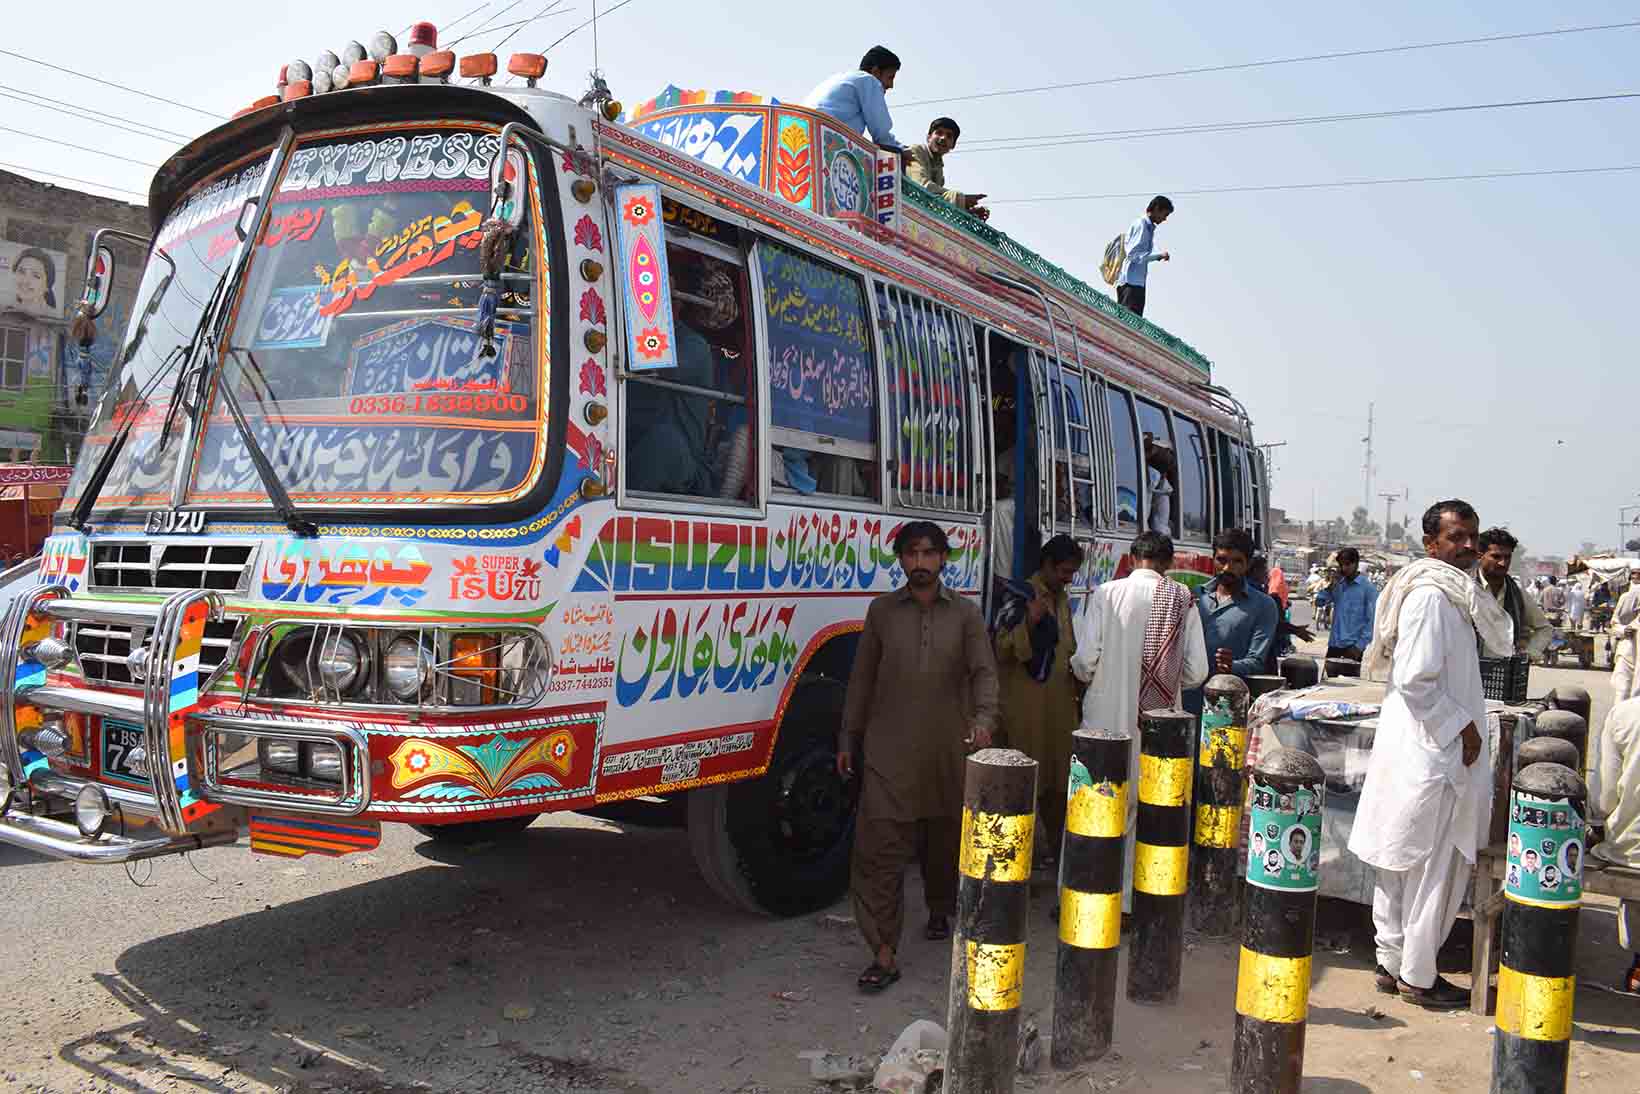 Ein bunt bedruckter Bus in Pakistan.